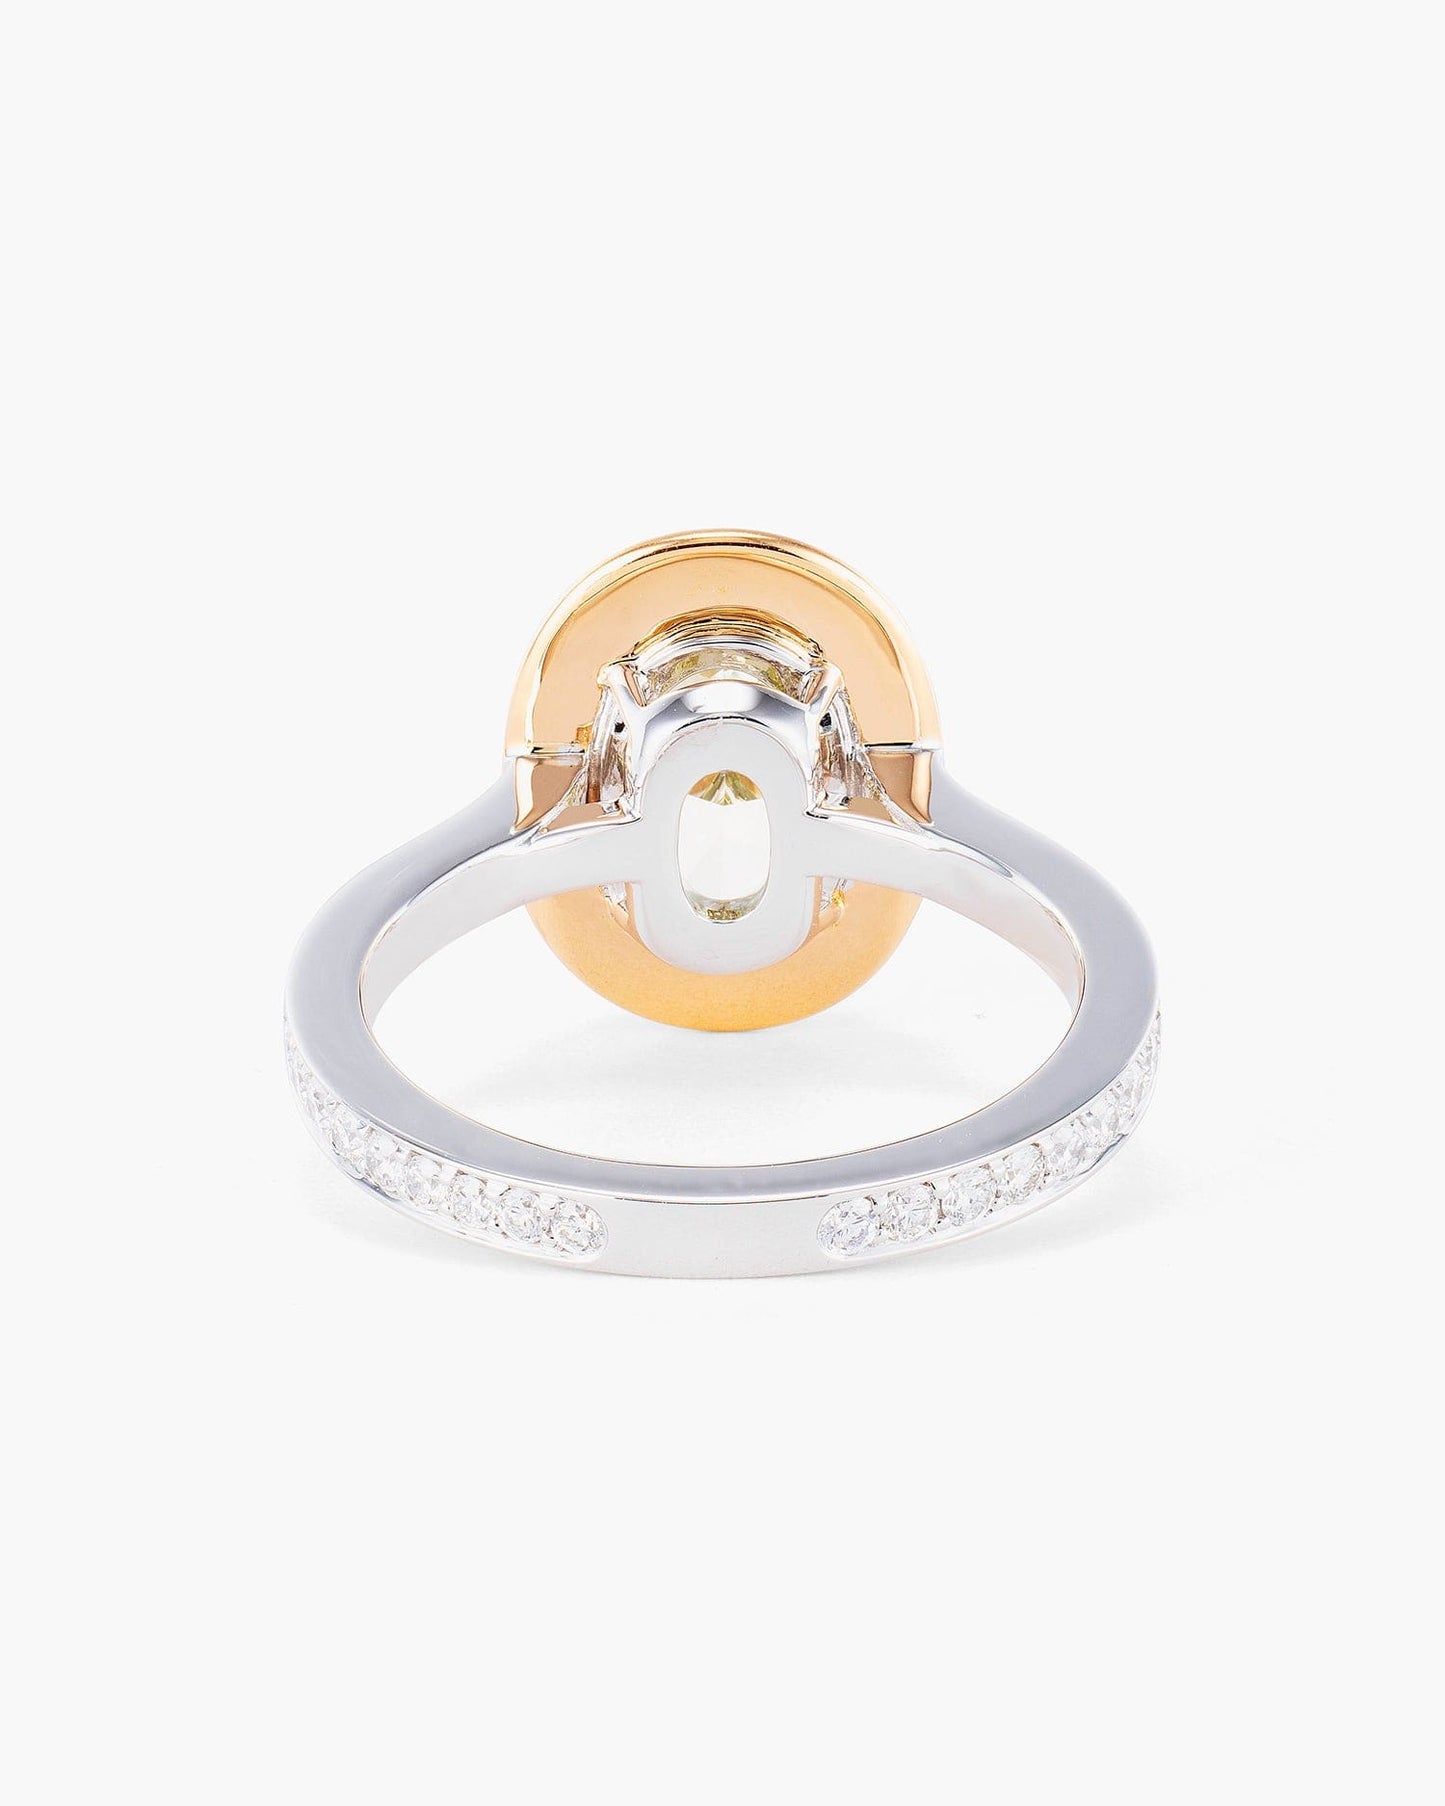 2.01 carat Oval Shape Chameleon Diamond Ring